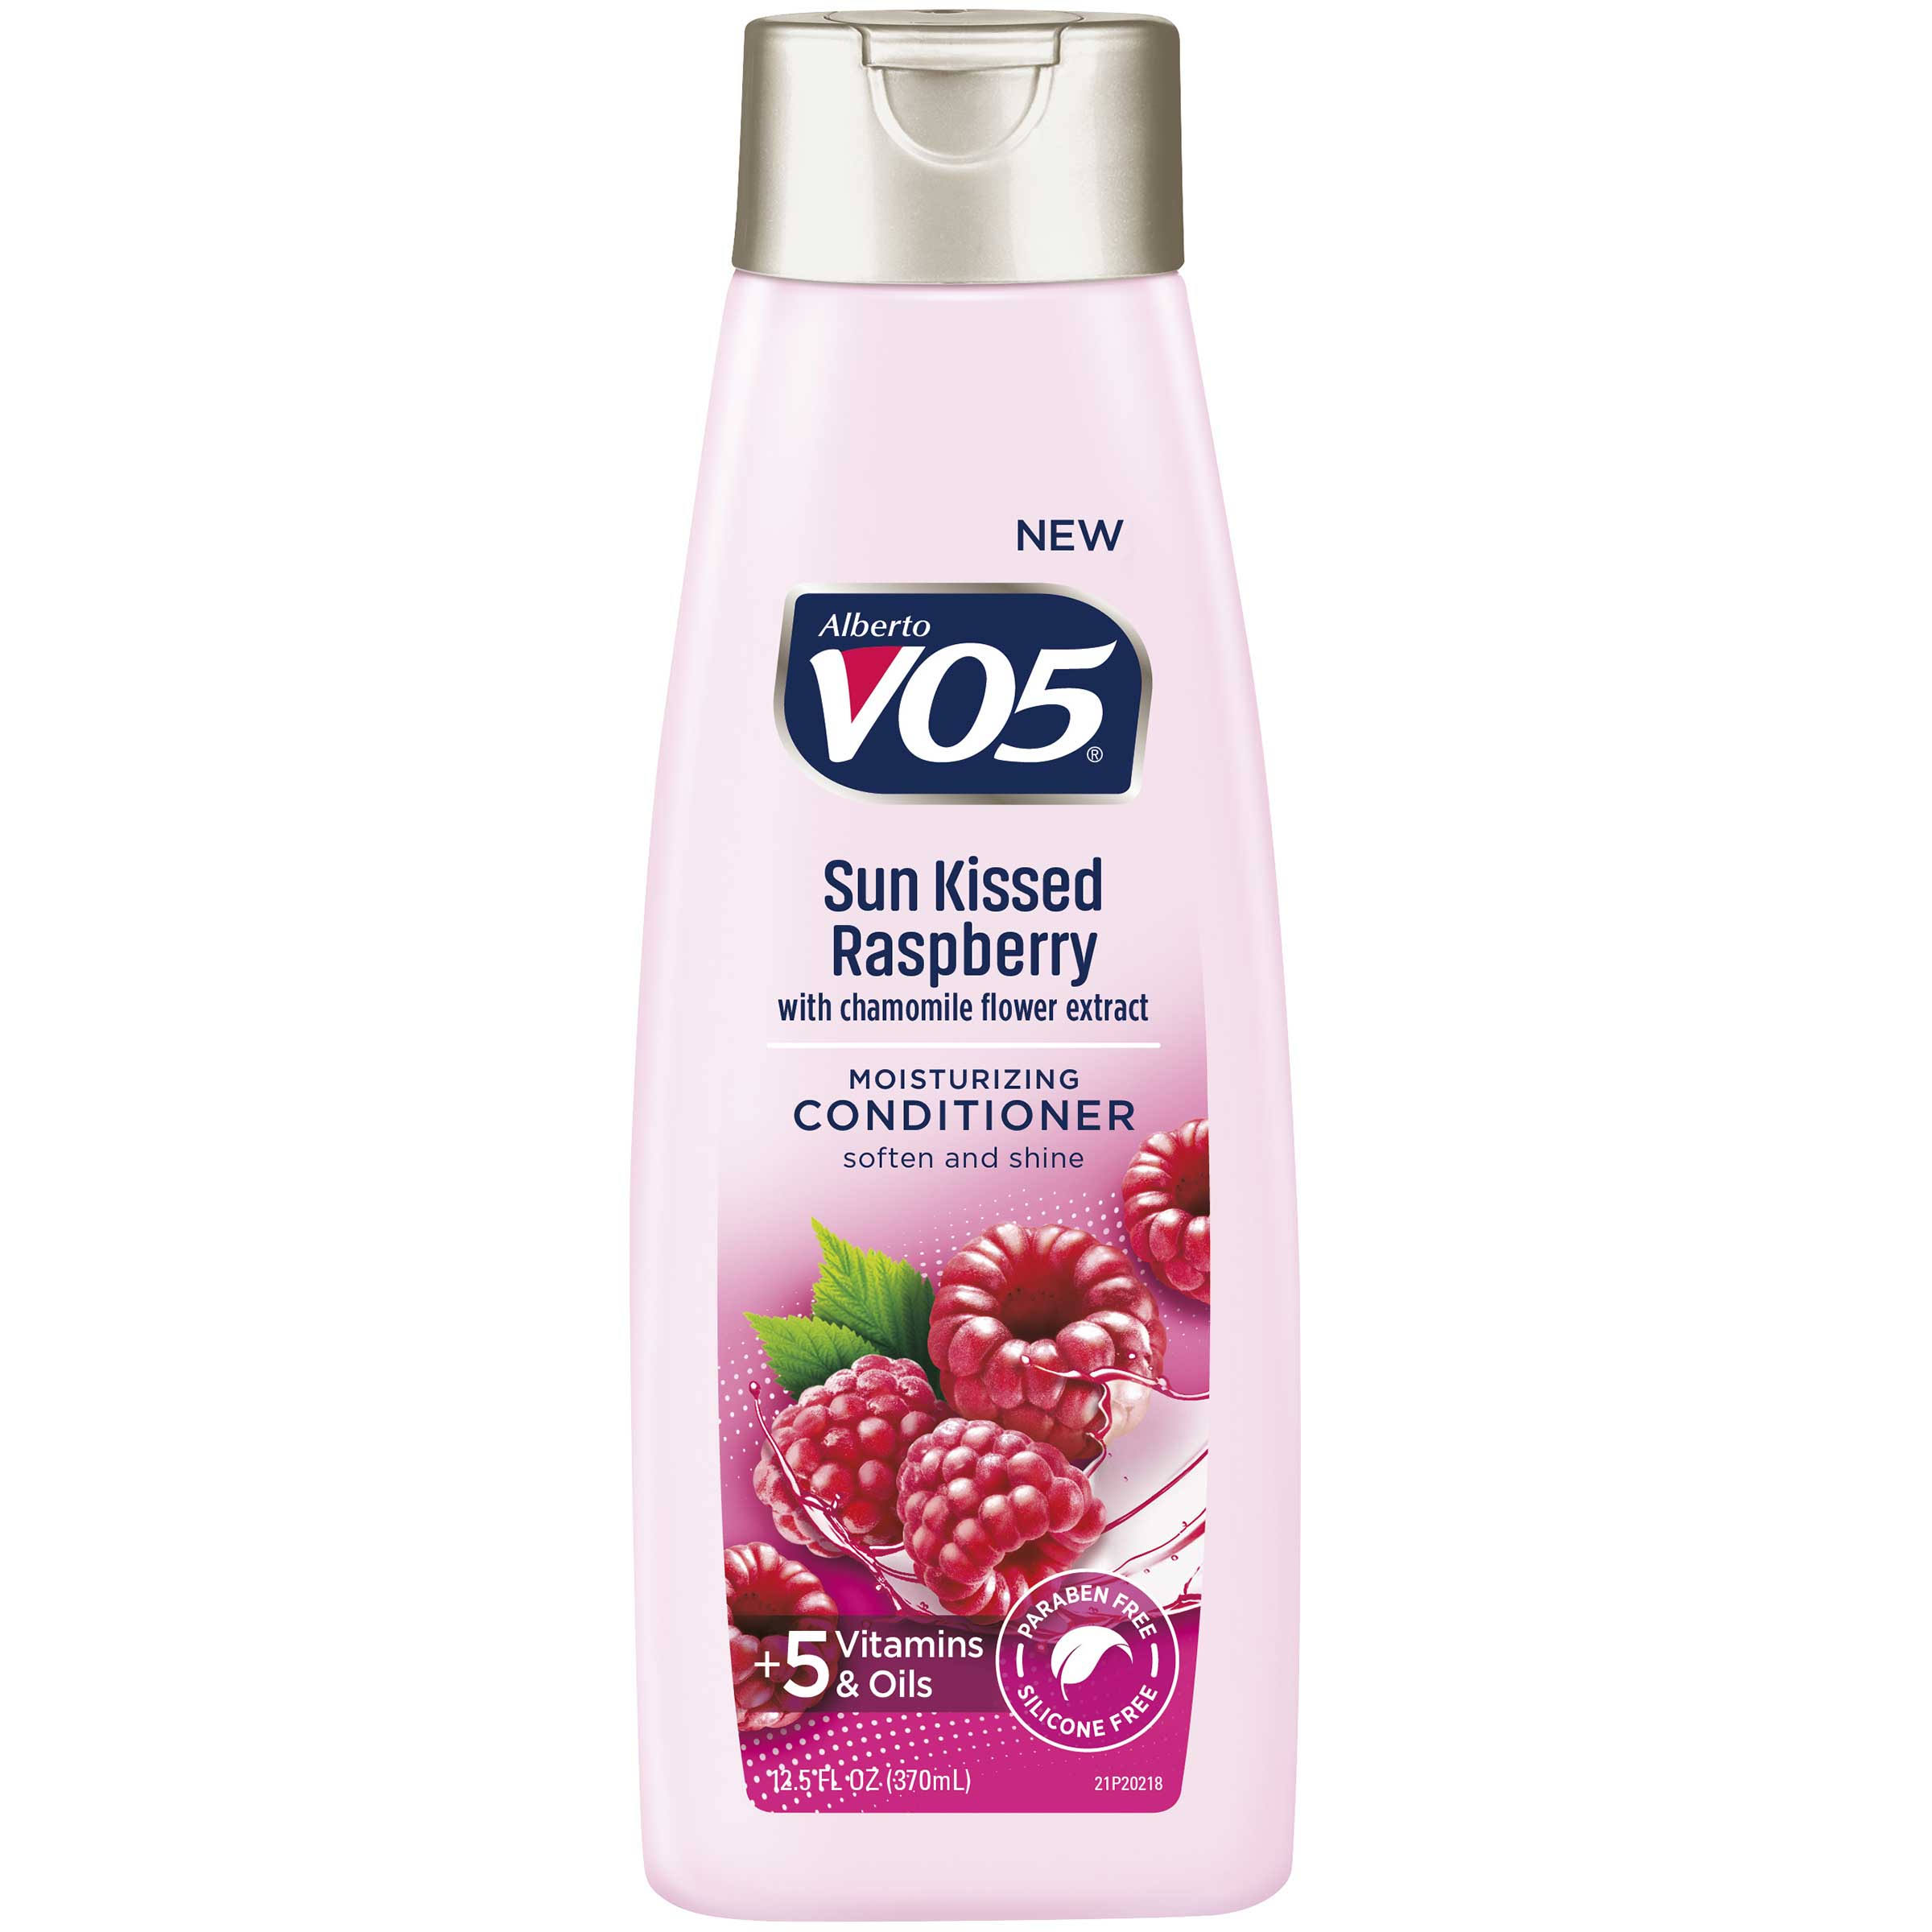 Alberto VO5 Herbal Escapes Balancing Conditioner - Sun Kissed Raspberry, 12.5oz